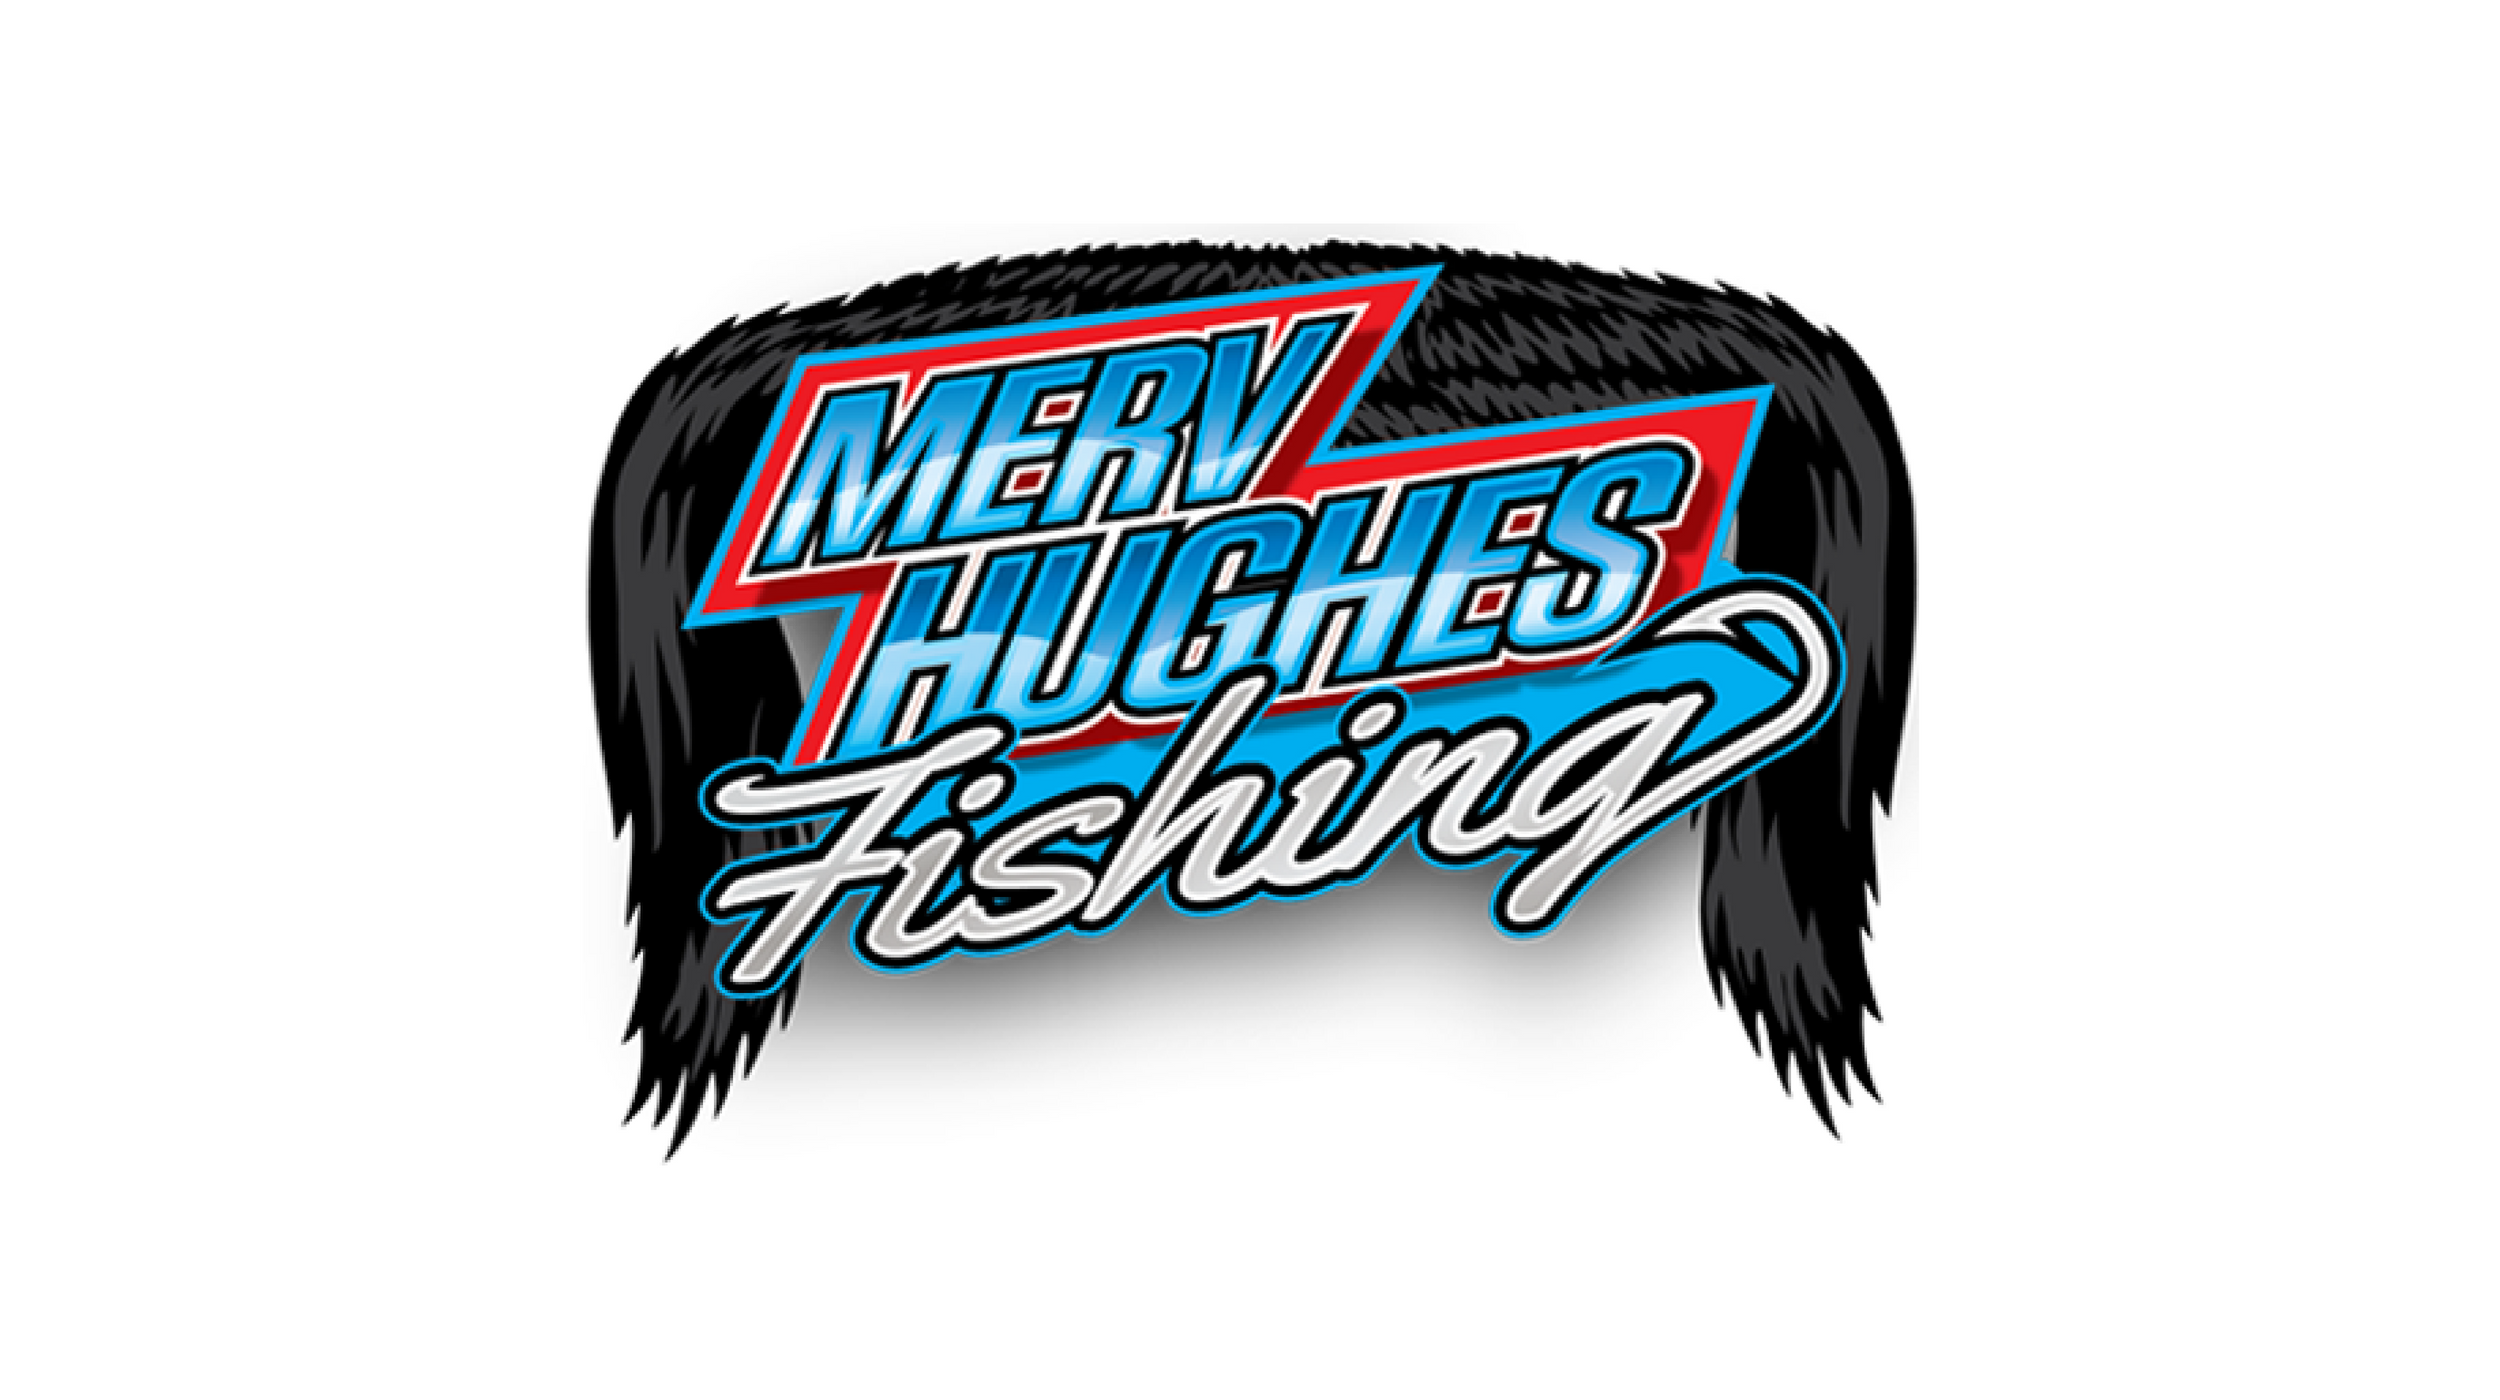 Merv Hughes Fishing Show